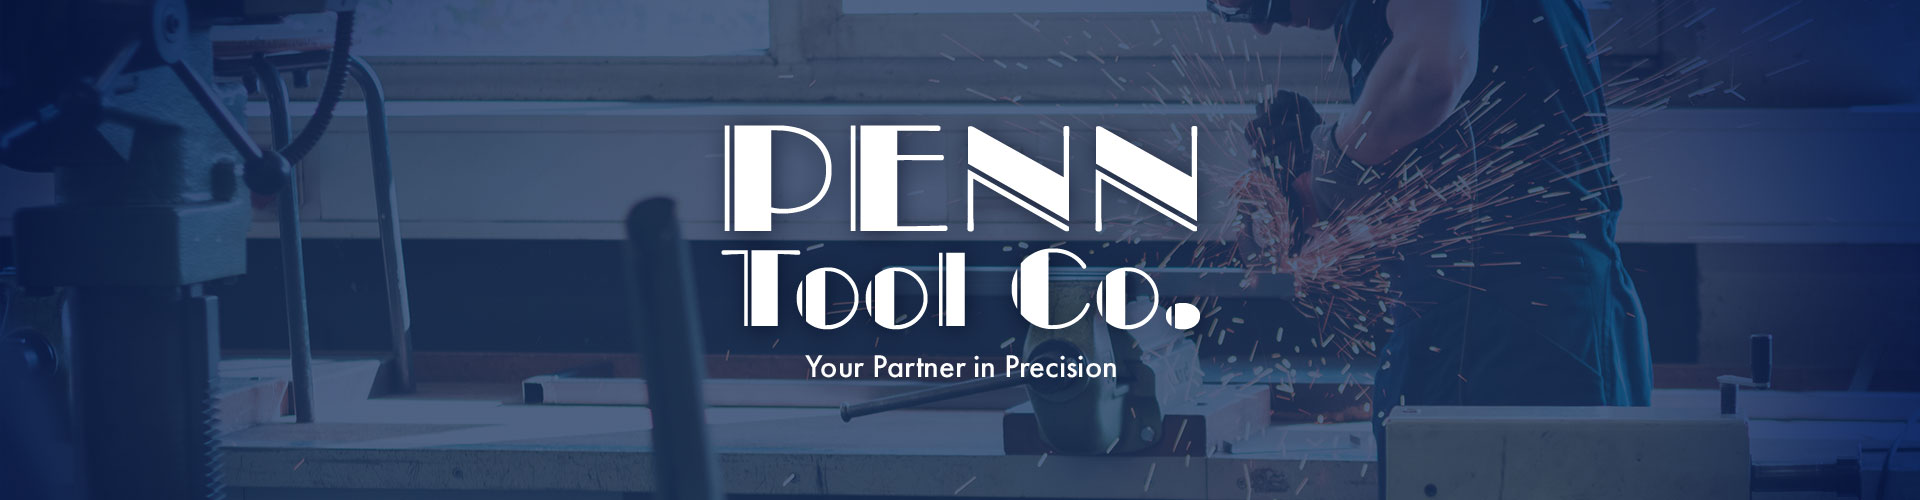 Case Study - Penn Tool Co.